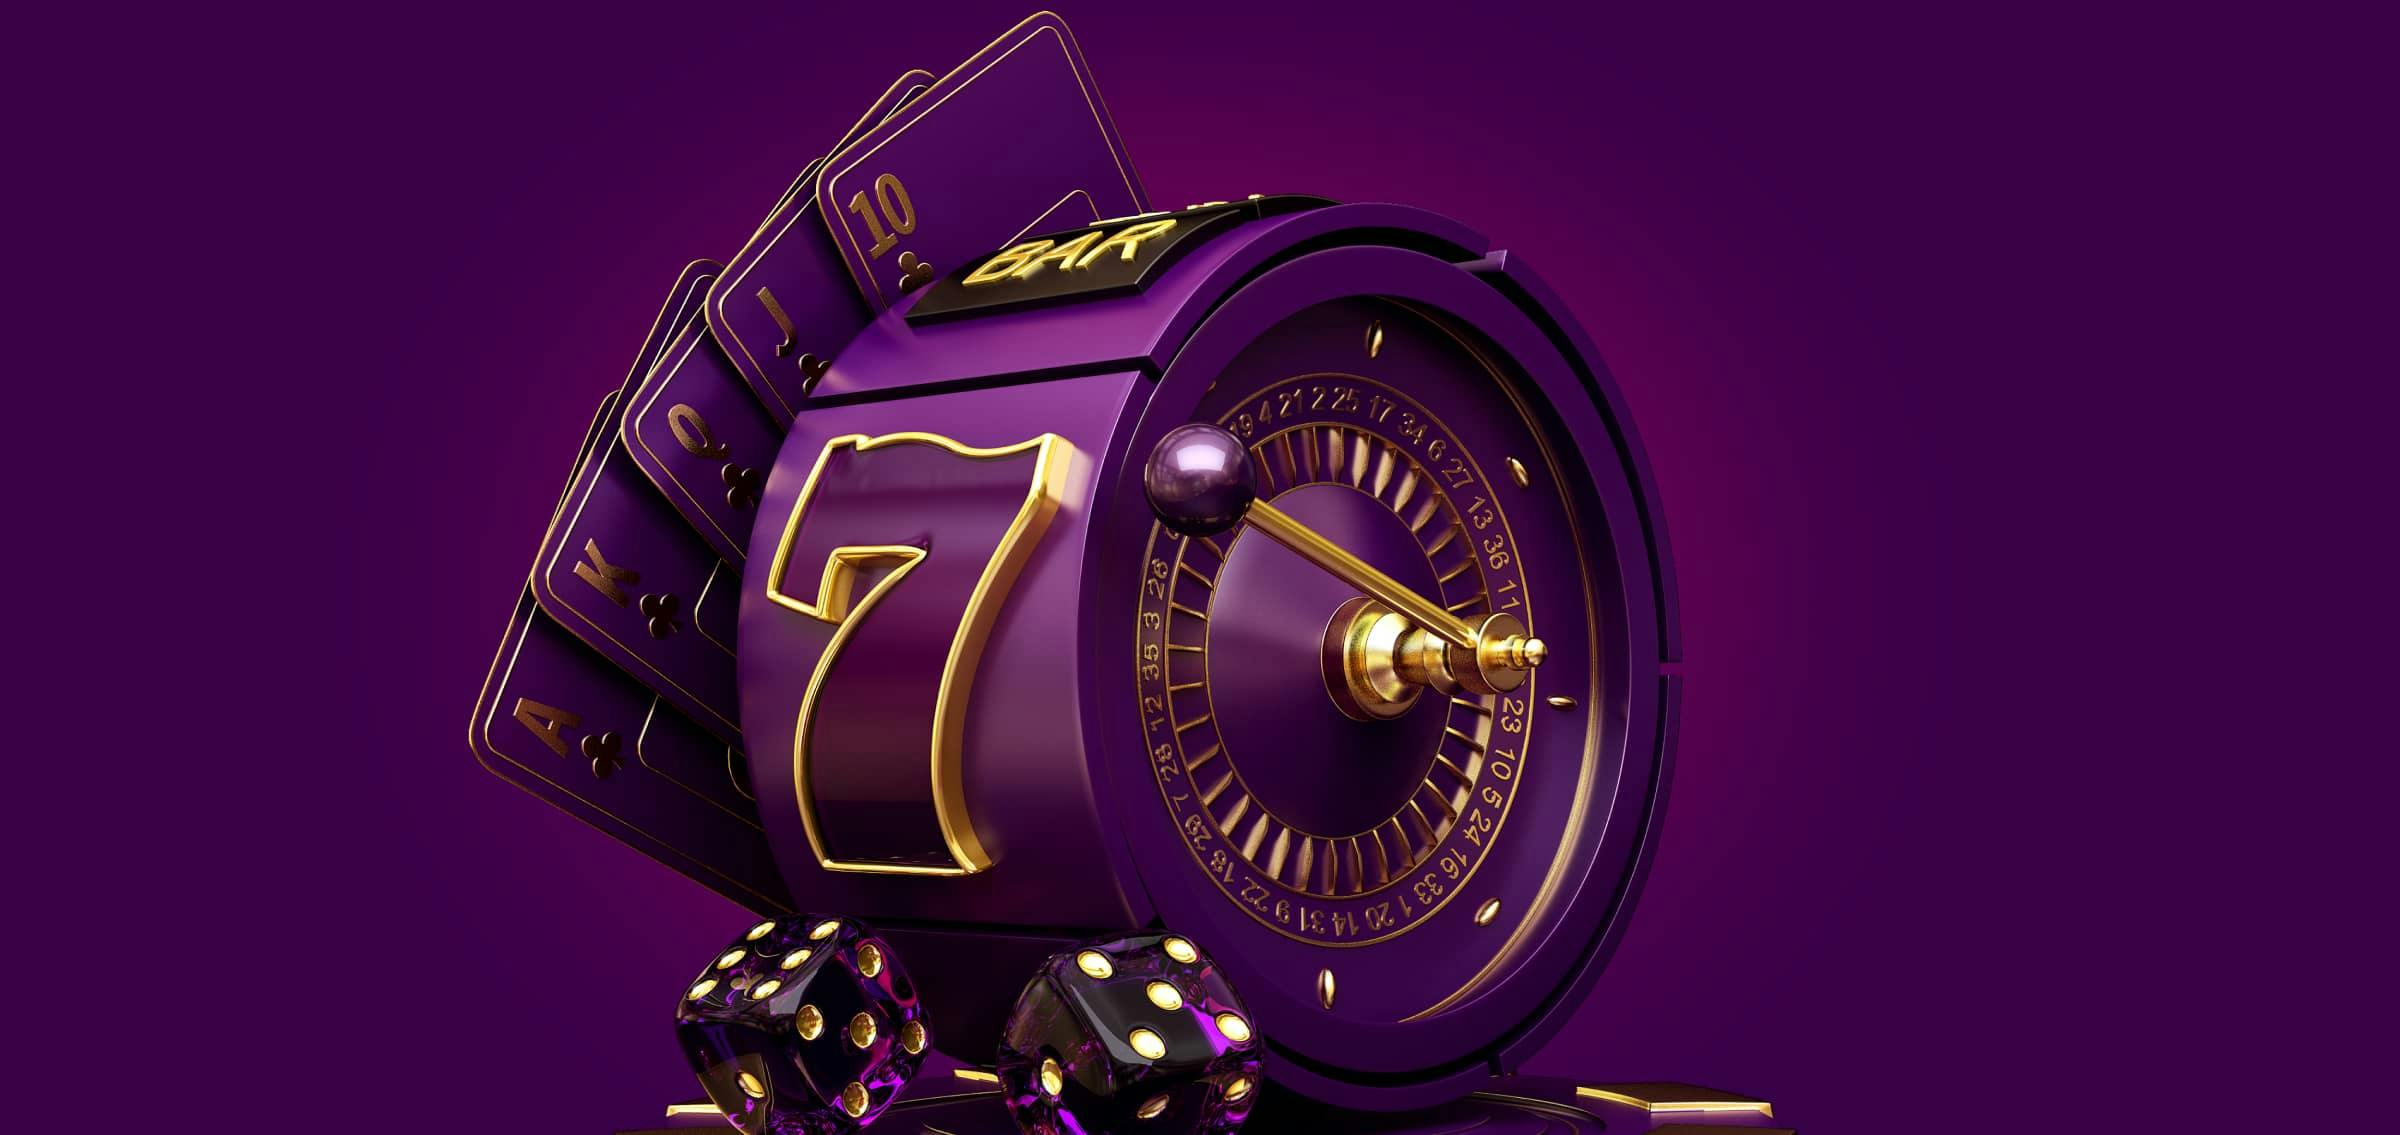 Slot machine tips: The secret to winning